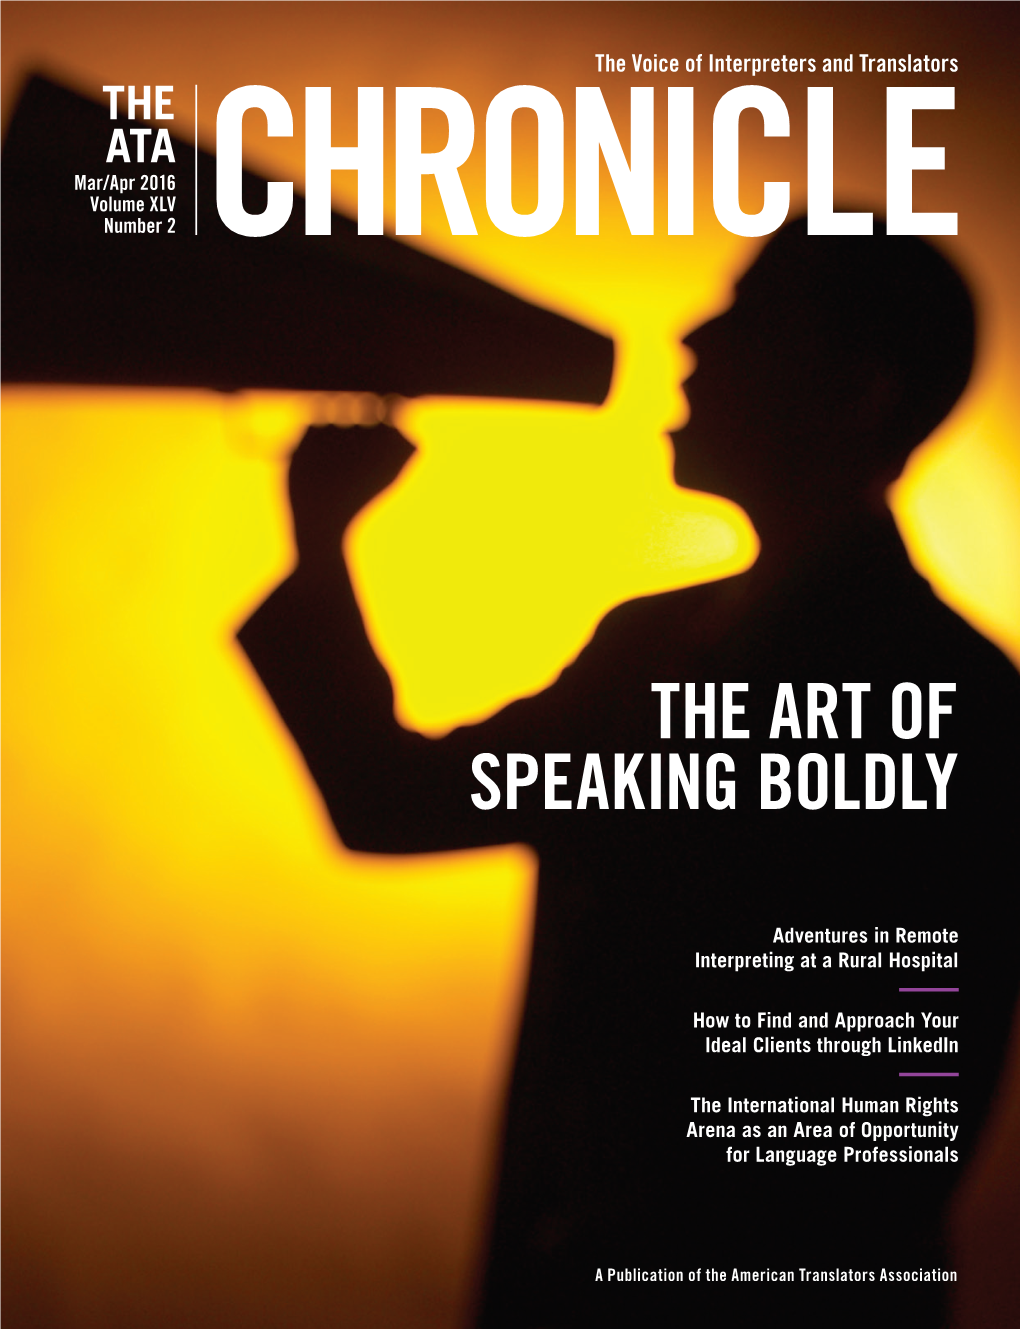 The Art of Speaking Boldly